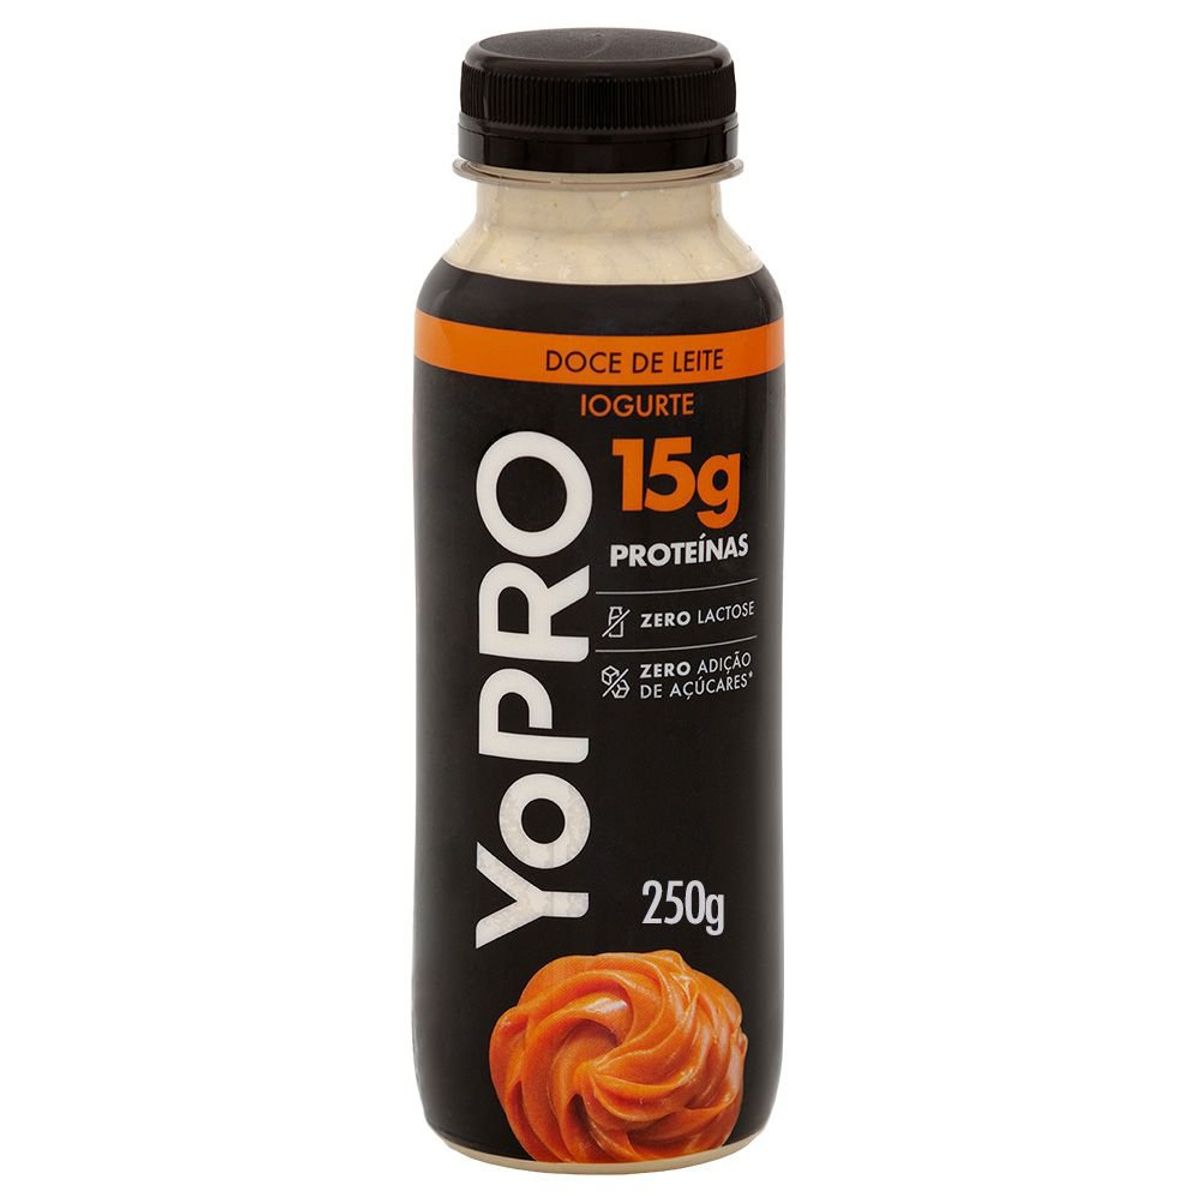 Iogurte Yopro Doce de Leite 250g